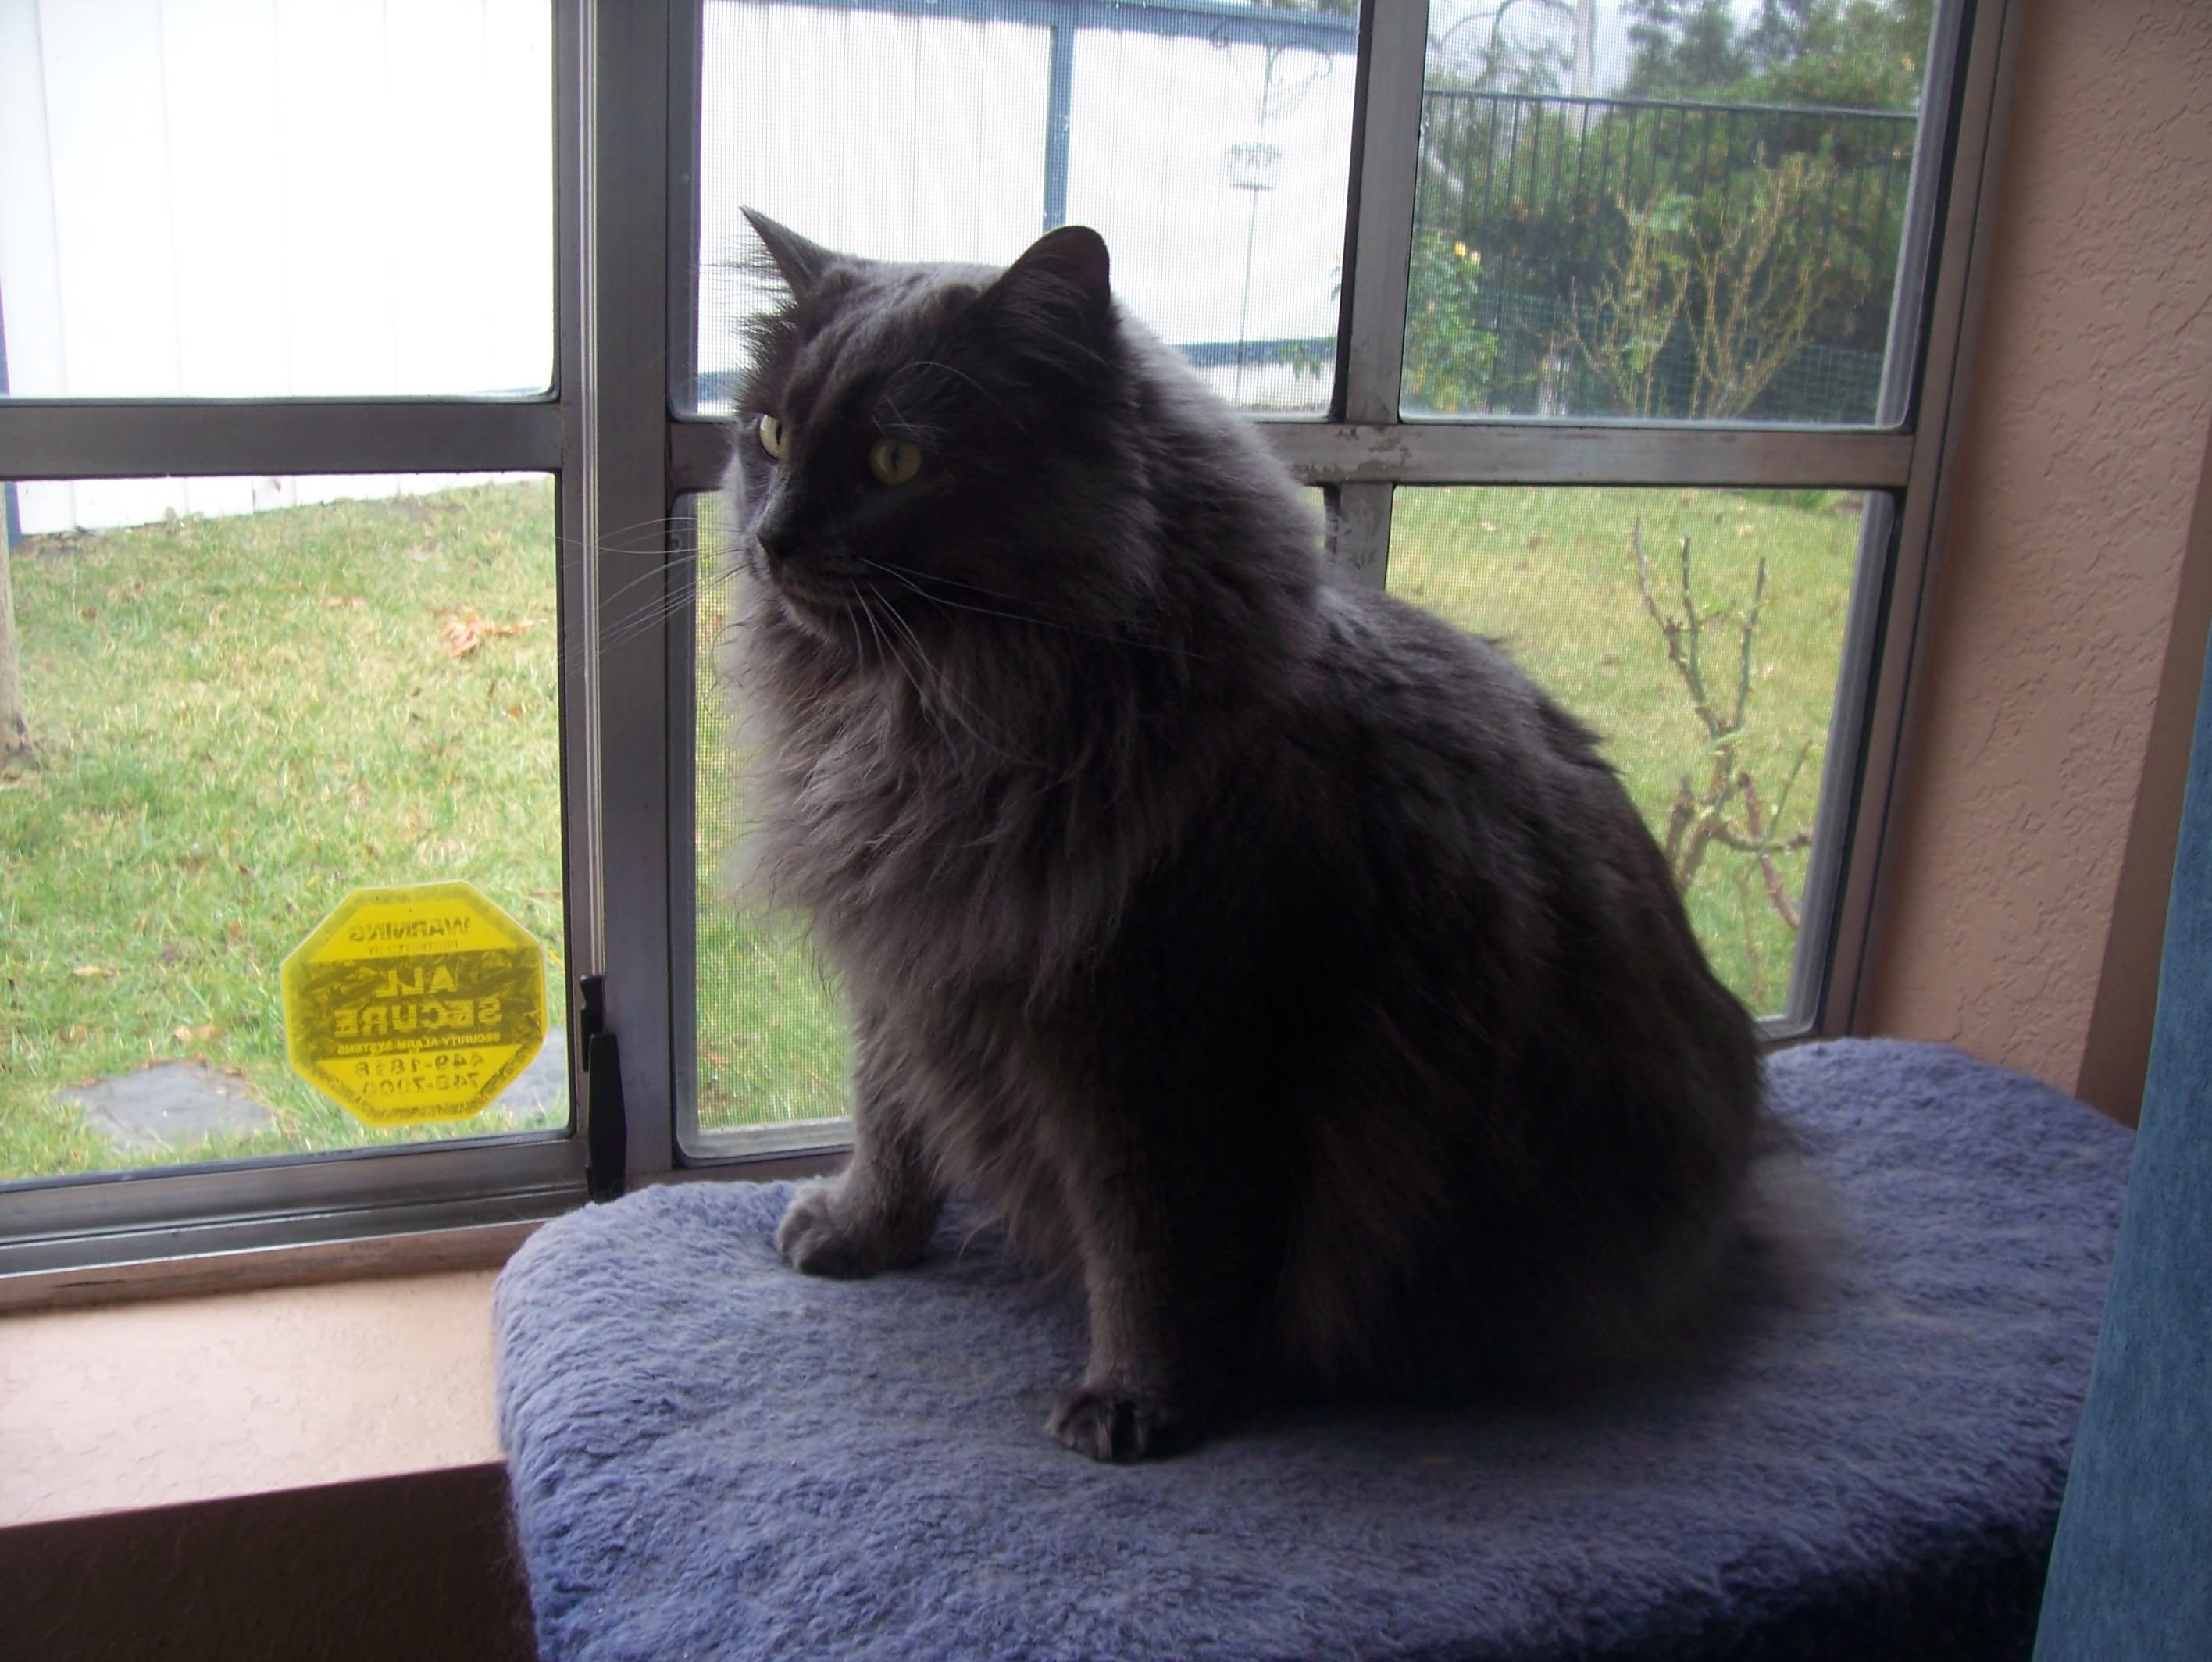 Hairy black cymric cat sitting near window cymric cat is